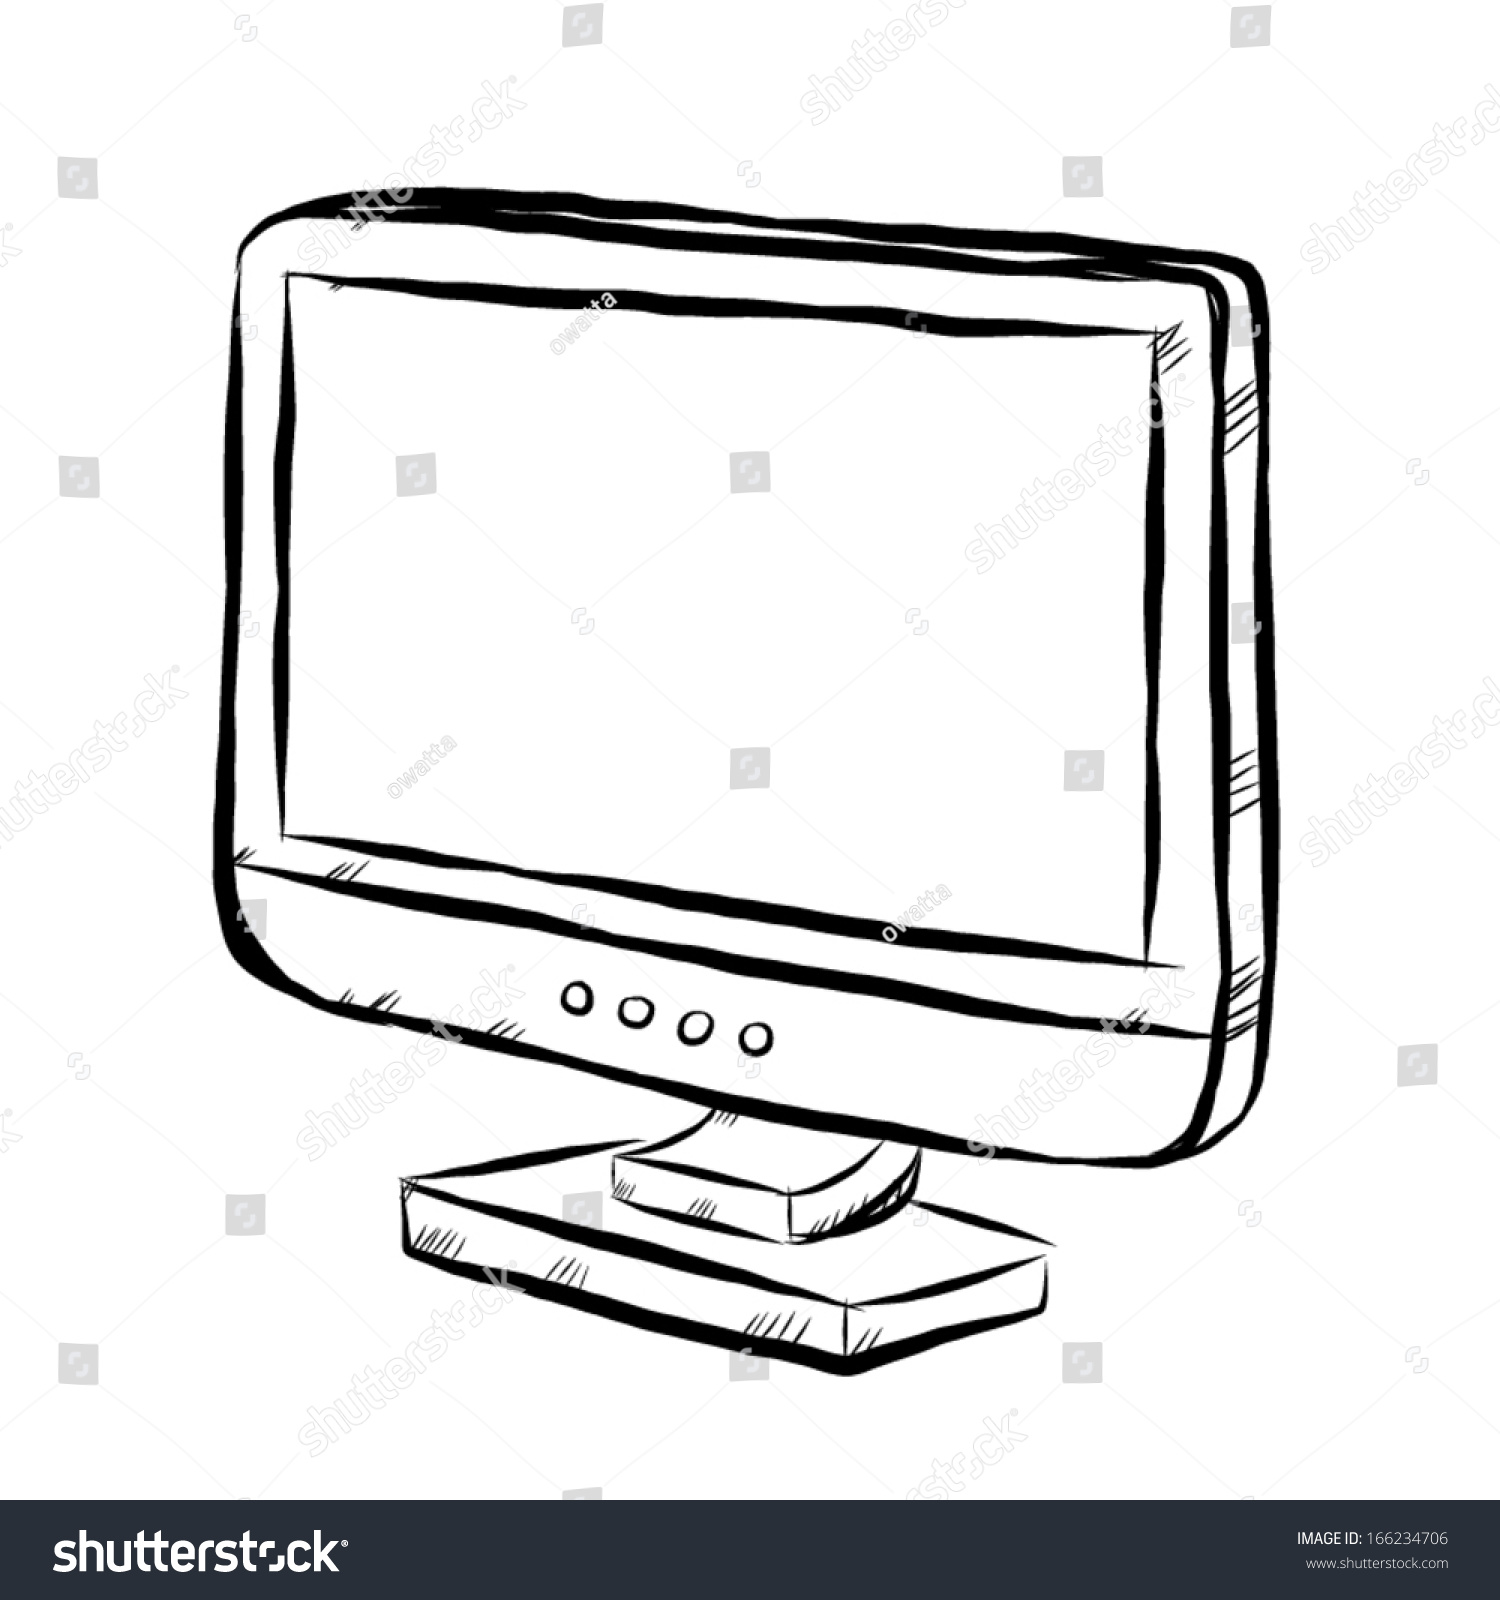 Flat Tv Computer Monitor Cartoon Vector Stock Vector Royalty Free